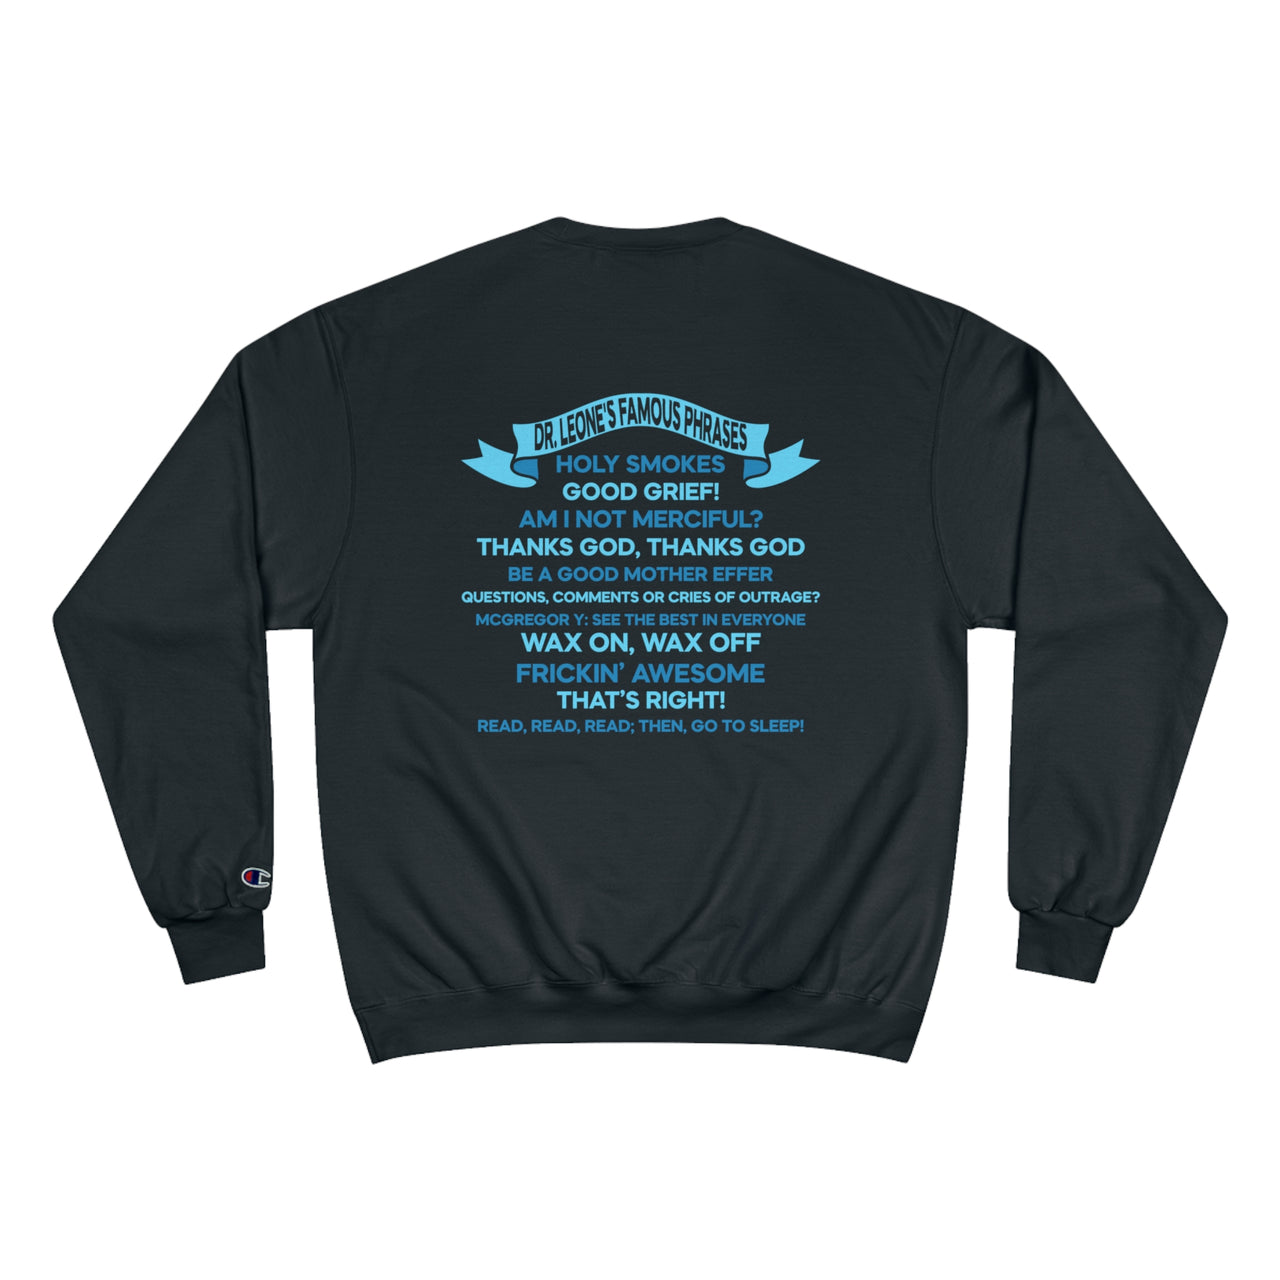 Champion Sweatshirt - Oceanside 70 - Blue Banner Back